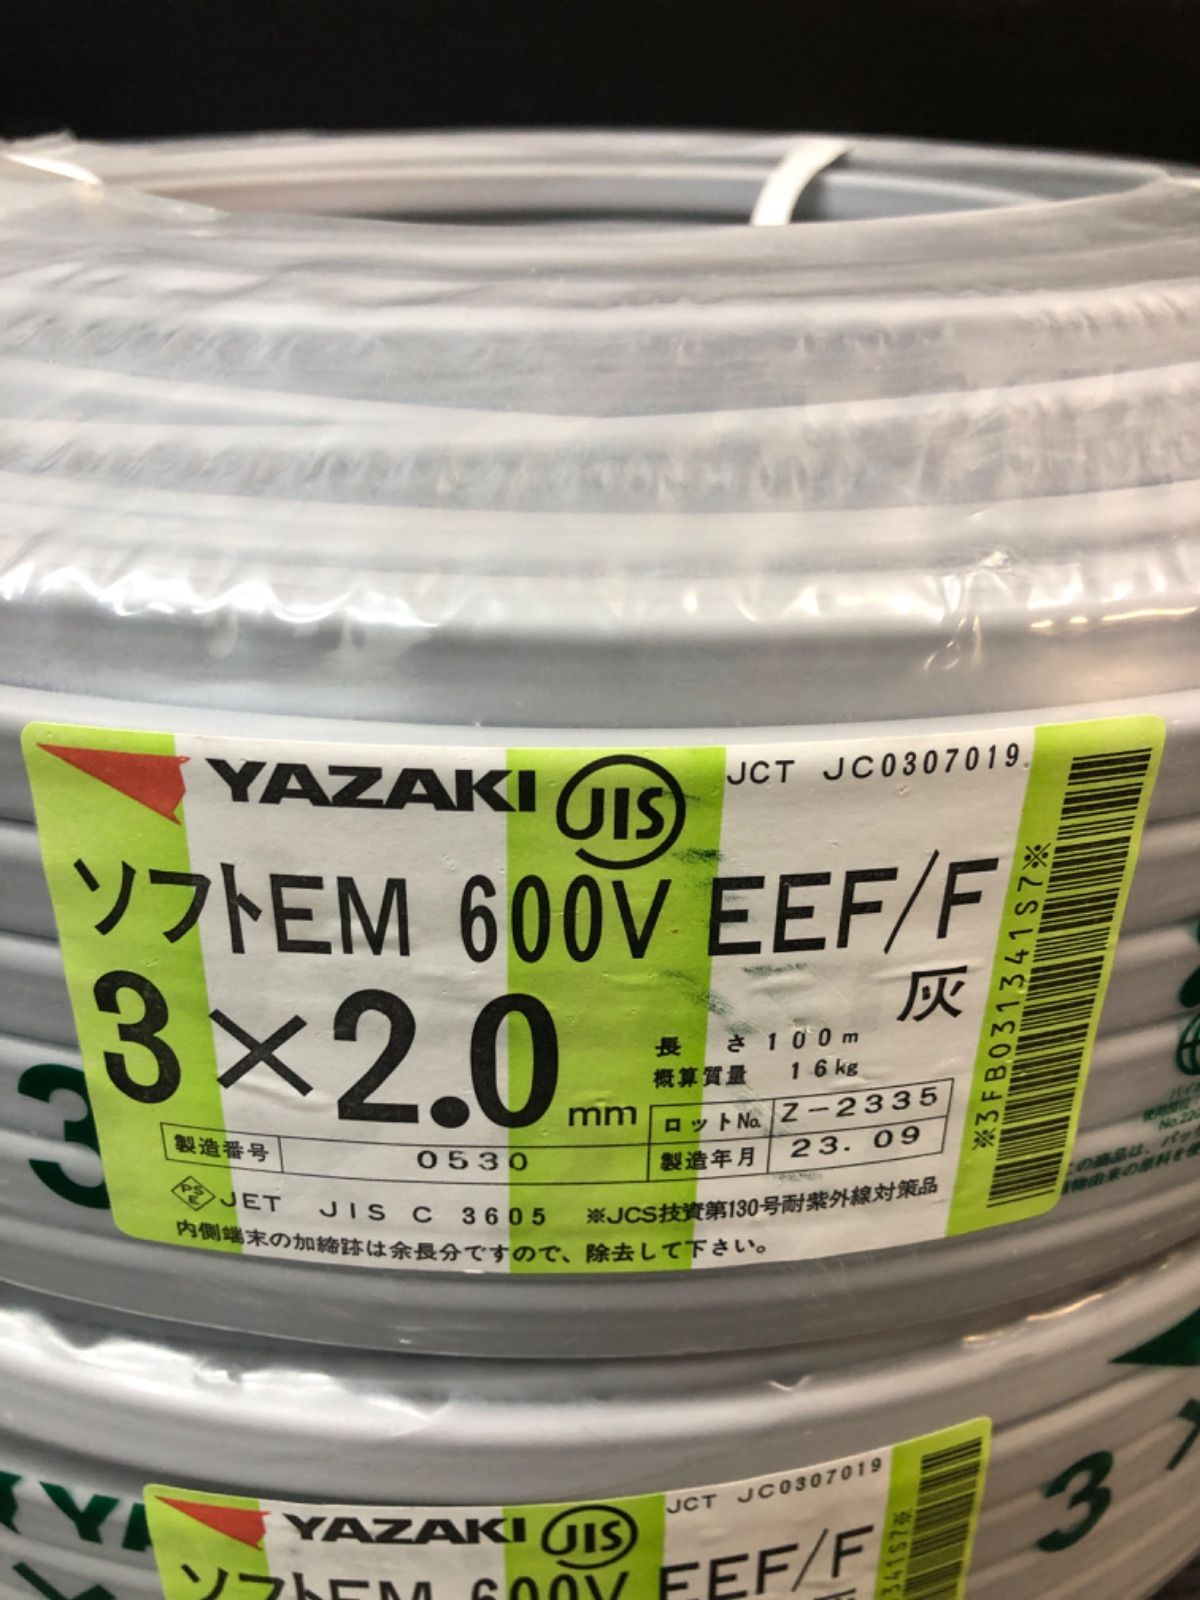 《XY320E/XY32EG》矢崎 ソフトEM-EEF/F ケーブル 黒赤緑 3×2.0 600V  2巻セット 未使用品 資材建築 改装工事